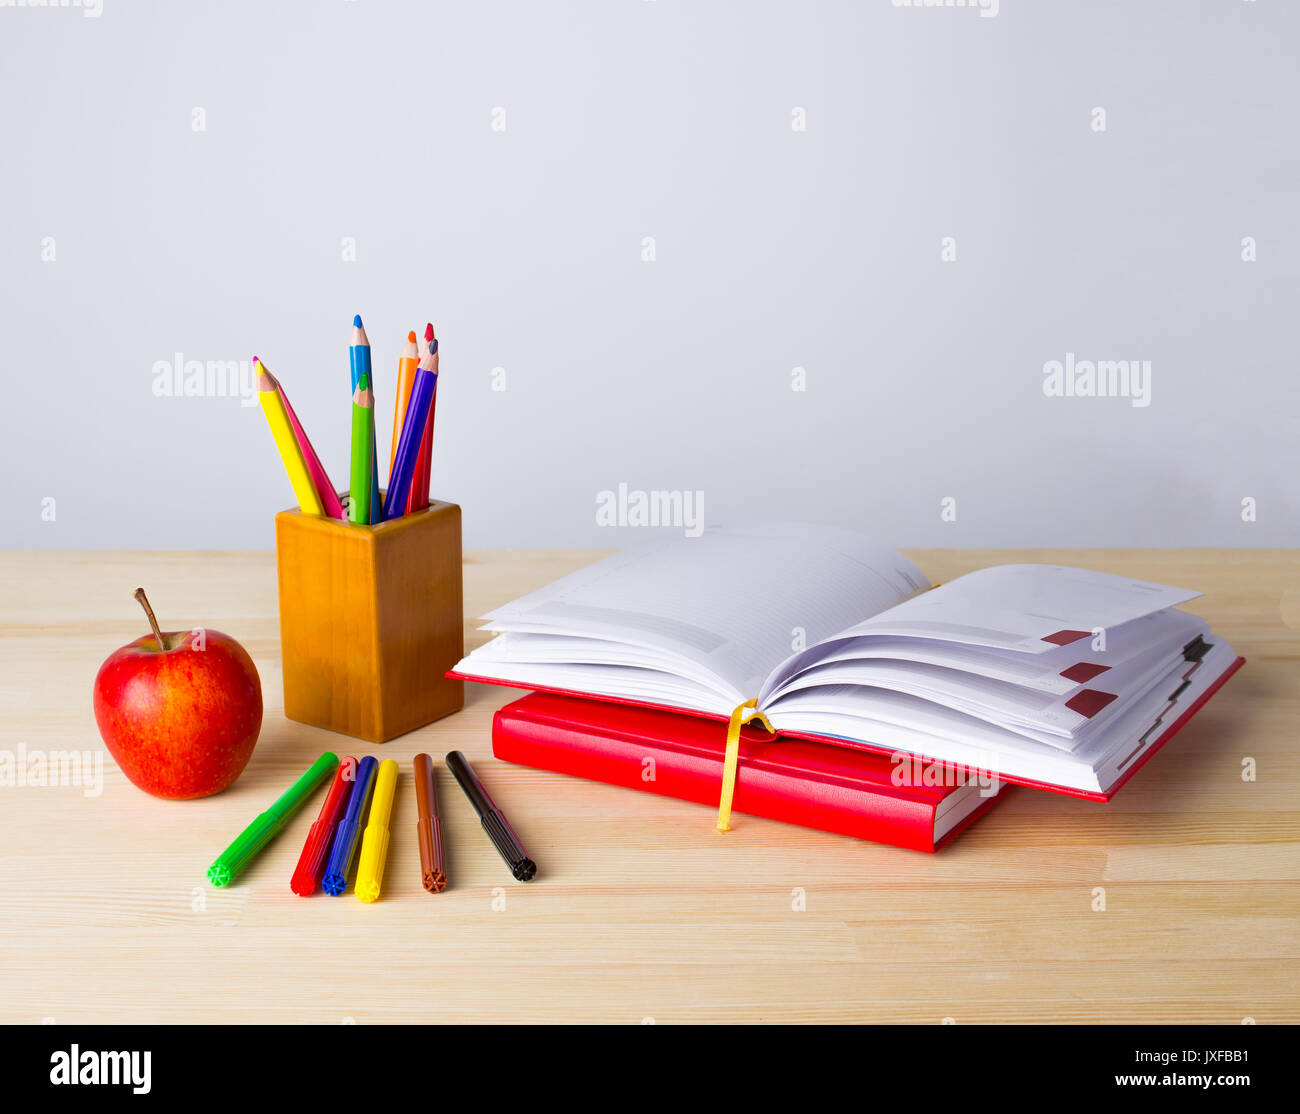 Pens and books stock image. Image of school, pencils, university - 5982045